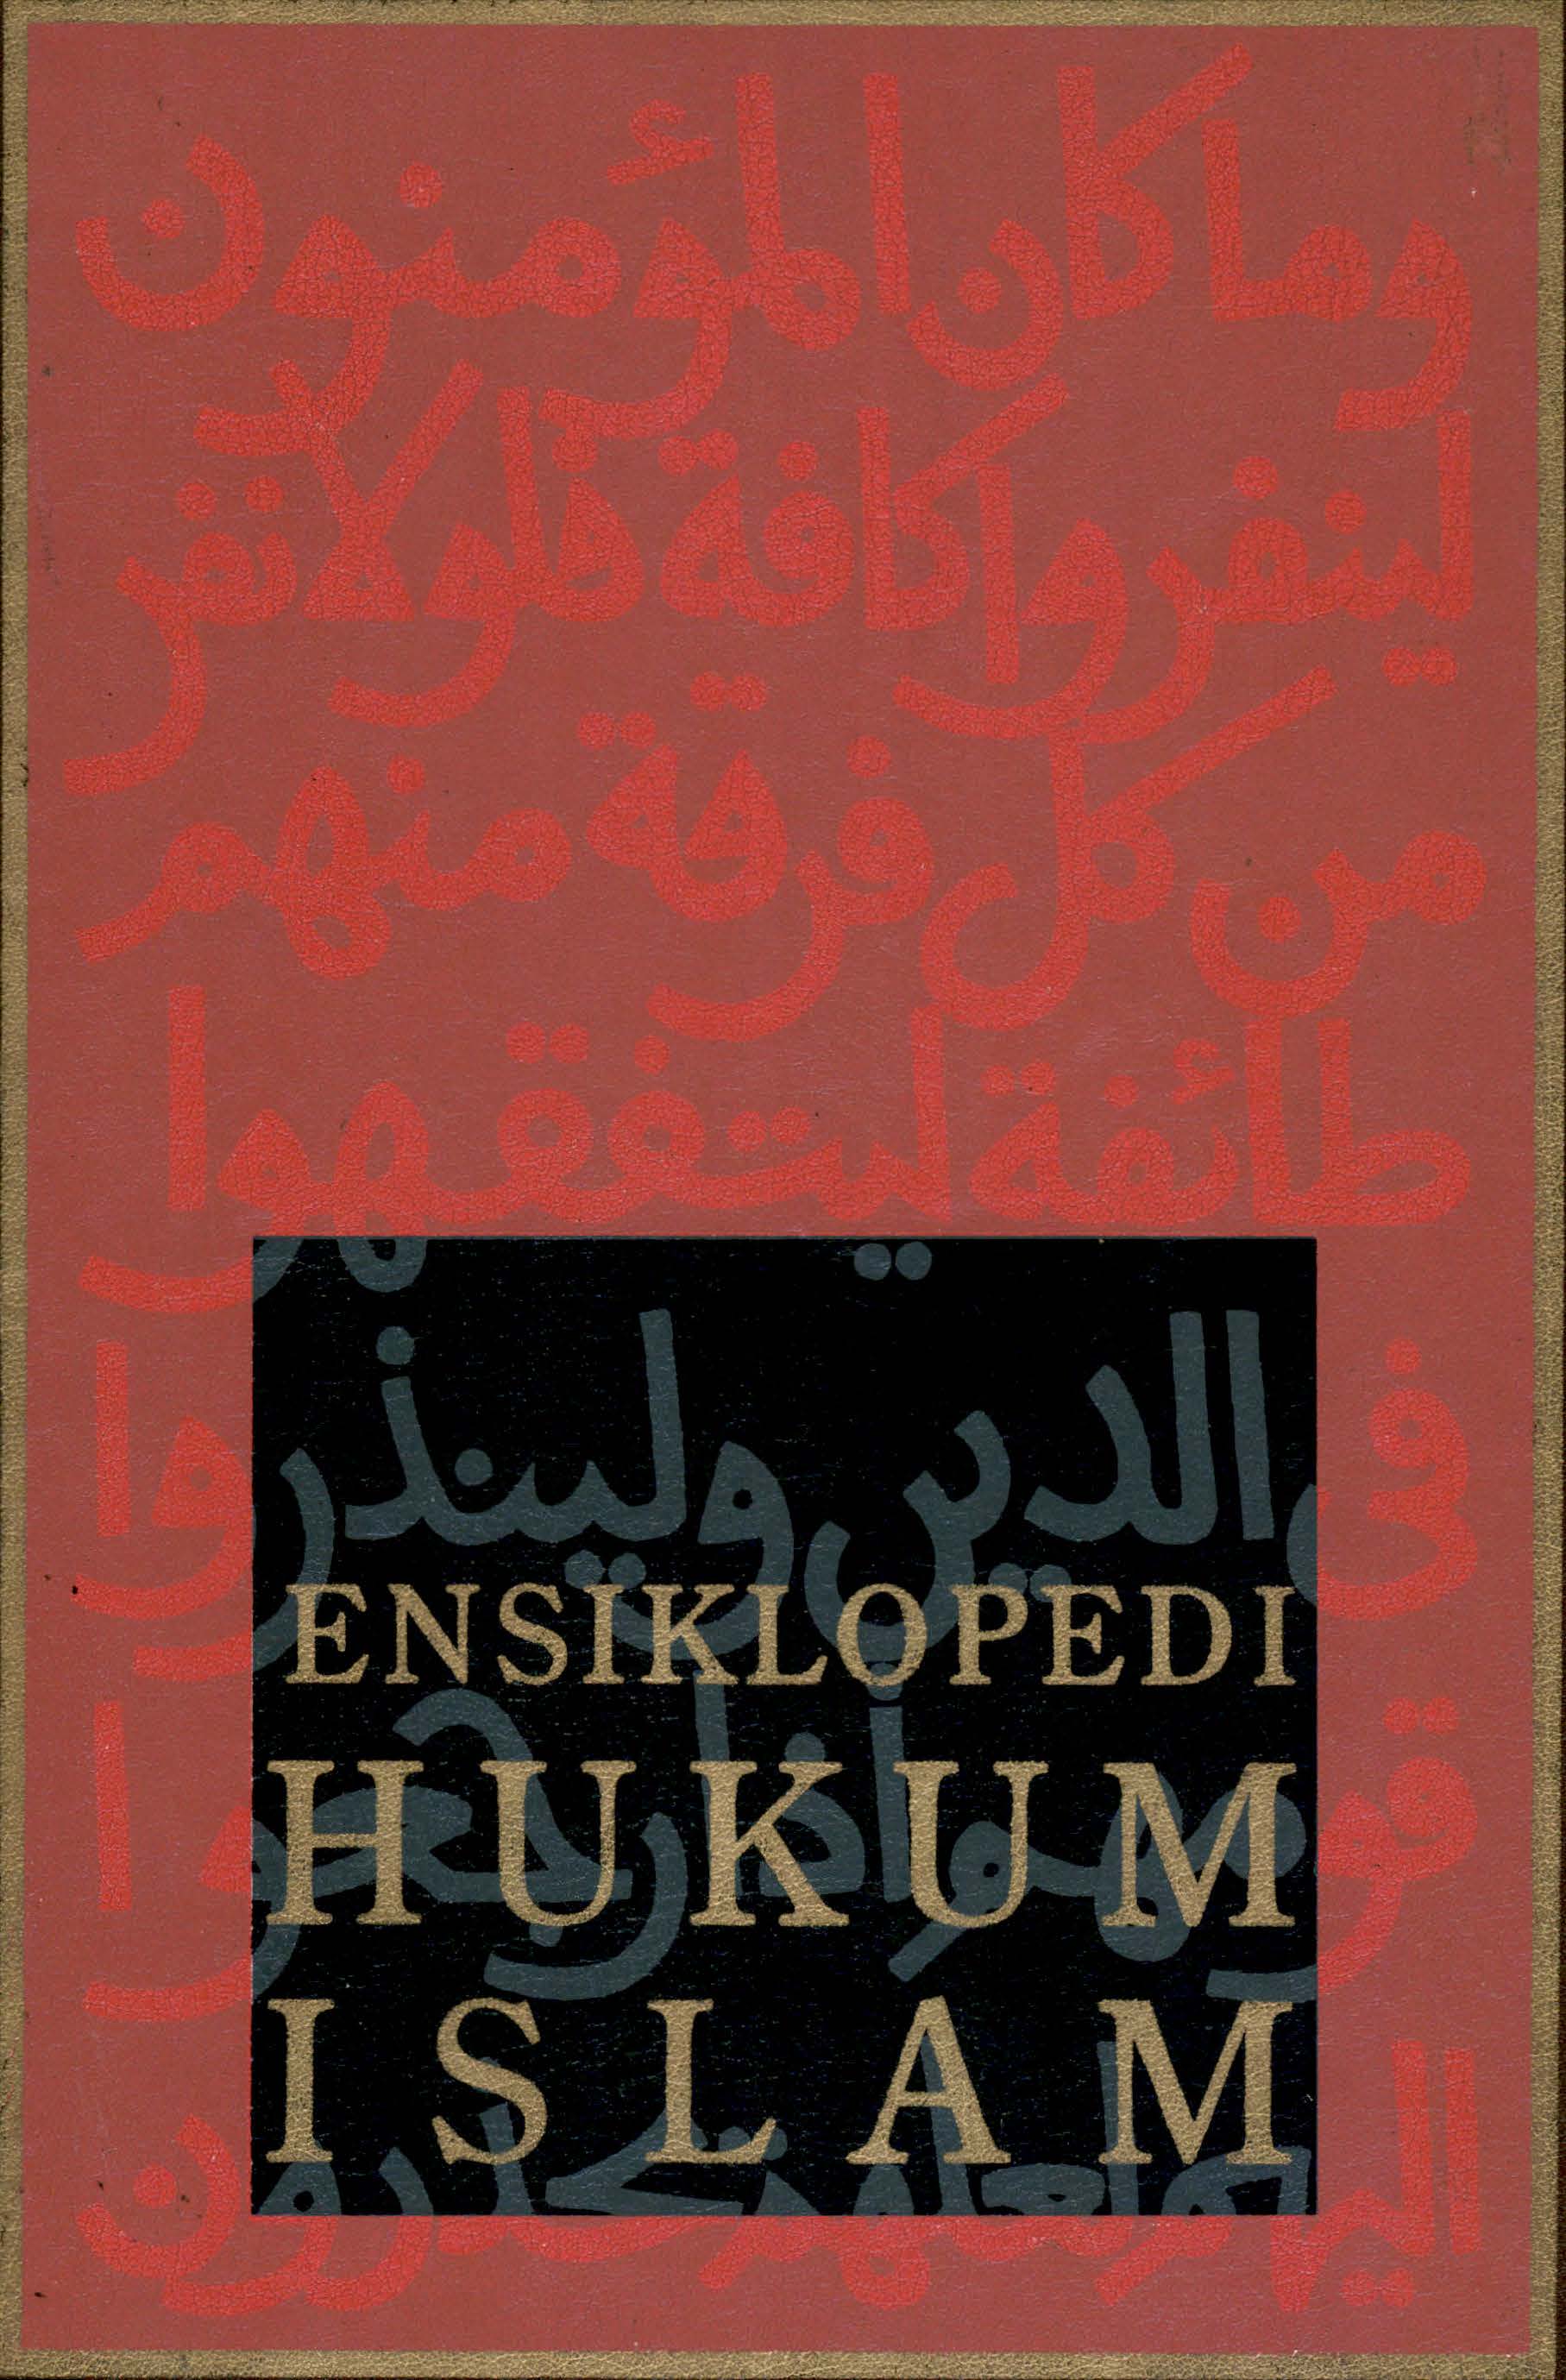 Ensiklopedi hukum islam : vol. 5 qan - tas